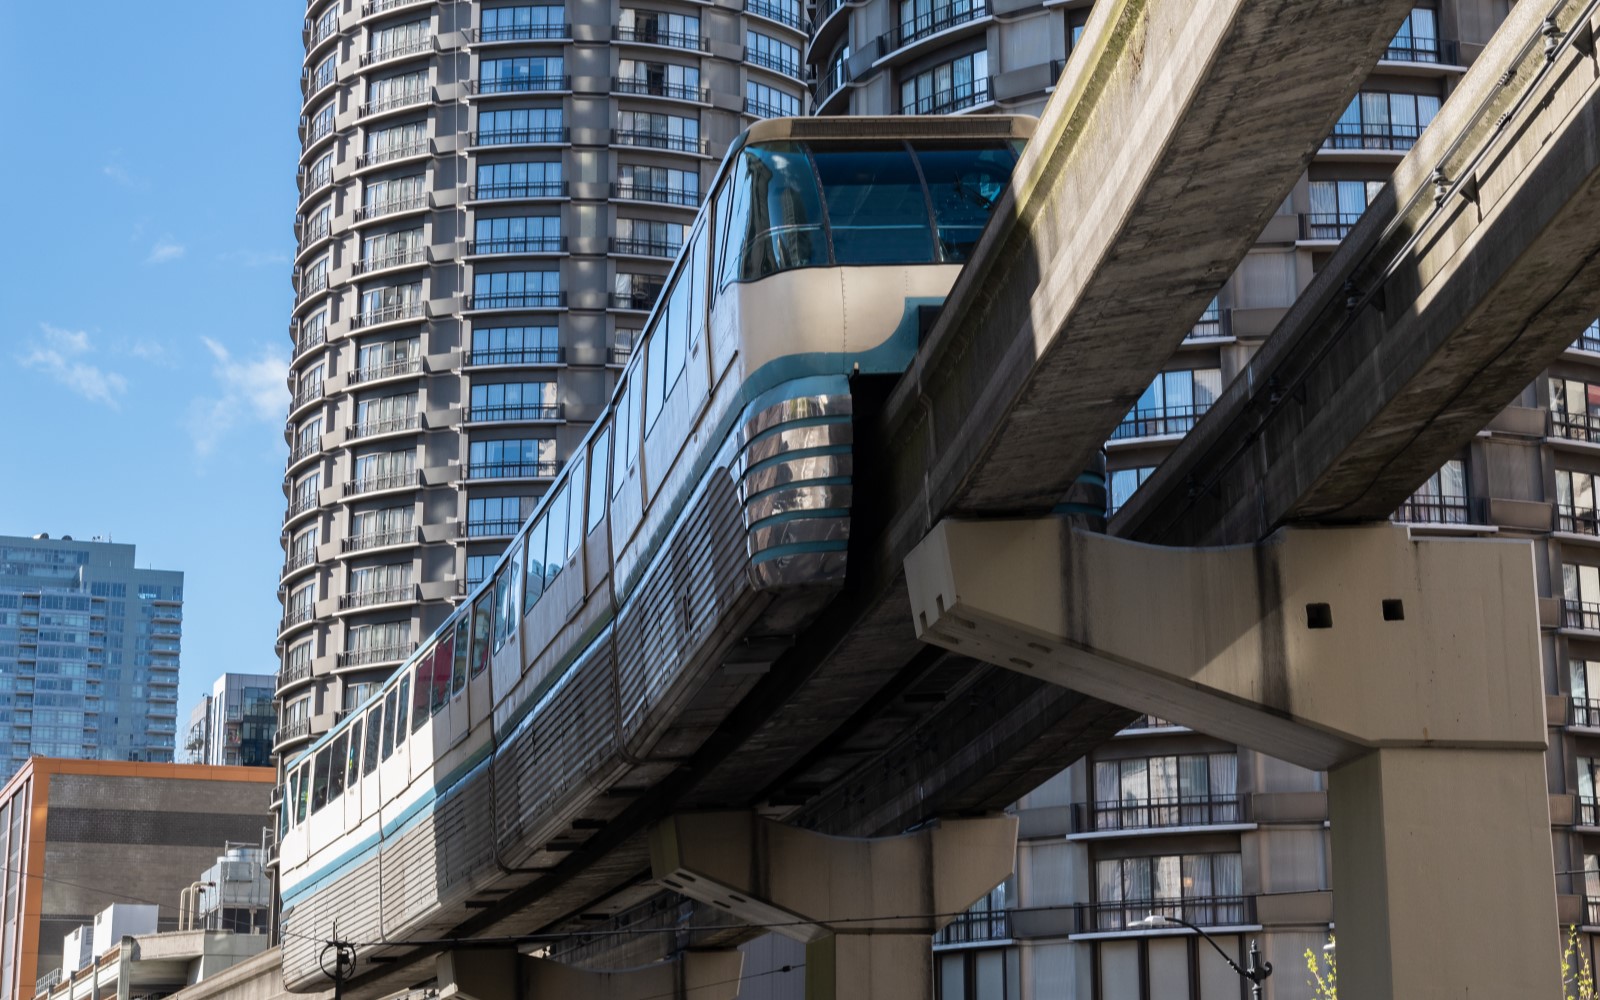 Public transportation train on elevated rail